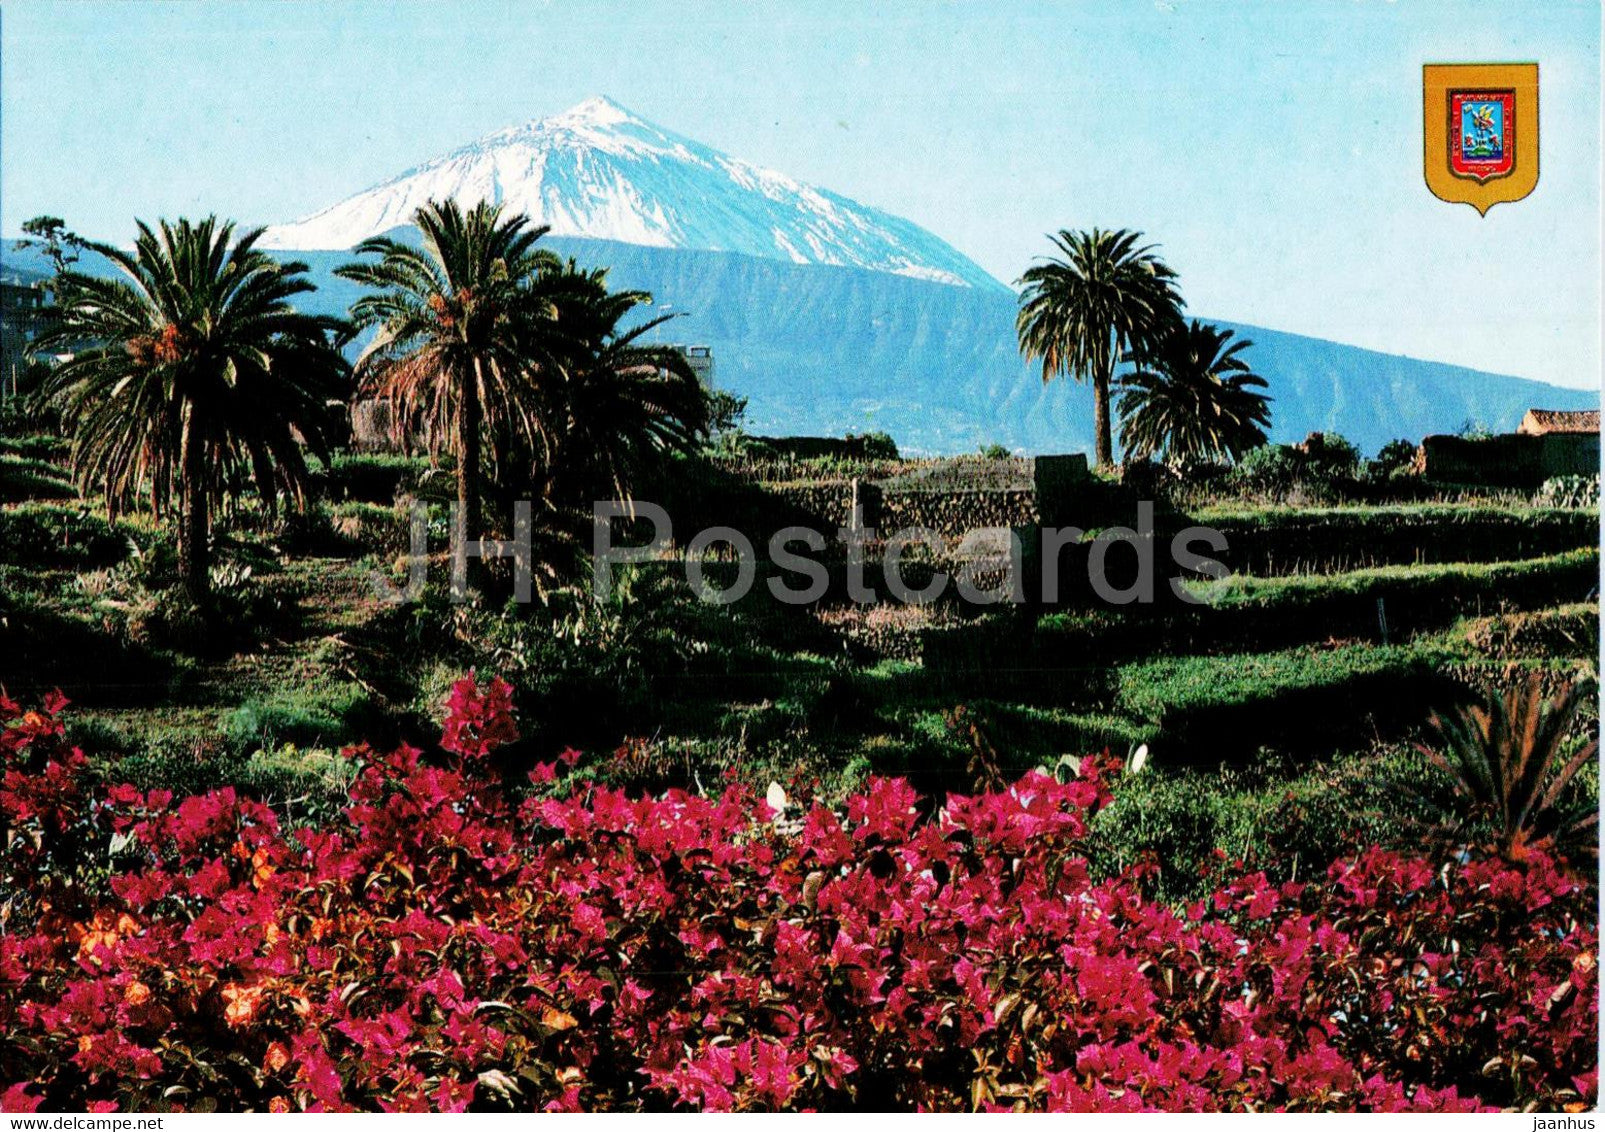 Tenerife - La Victoria - Vista General y Teide - General View - 397 - Spain - unused - JH Postcards